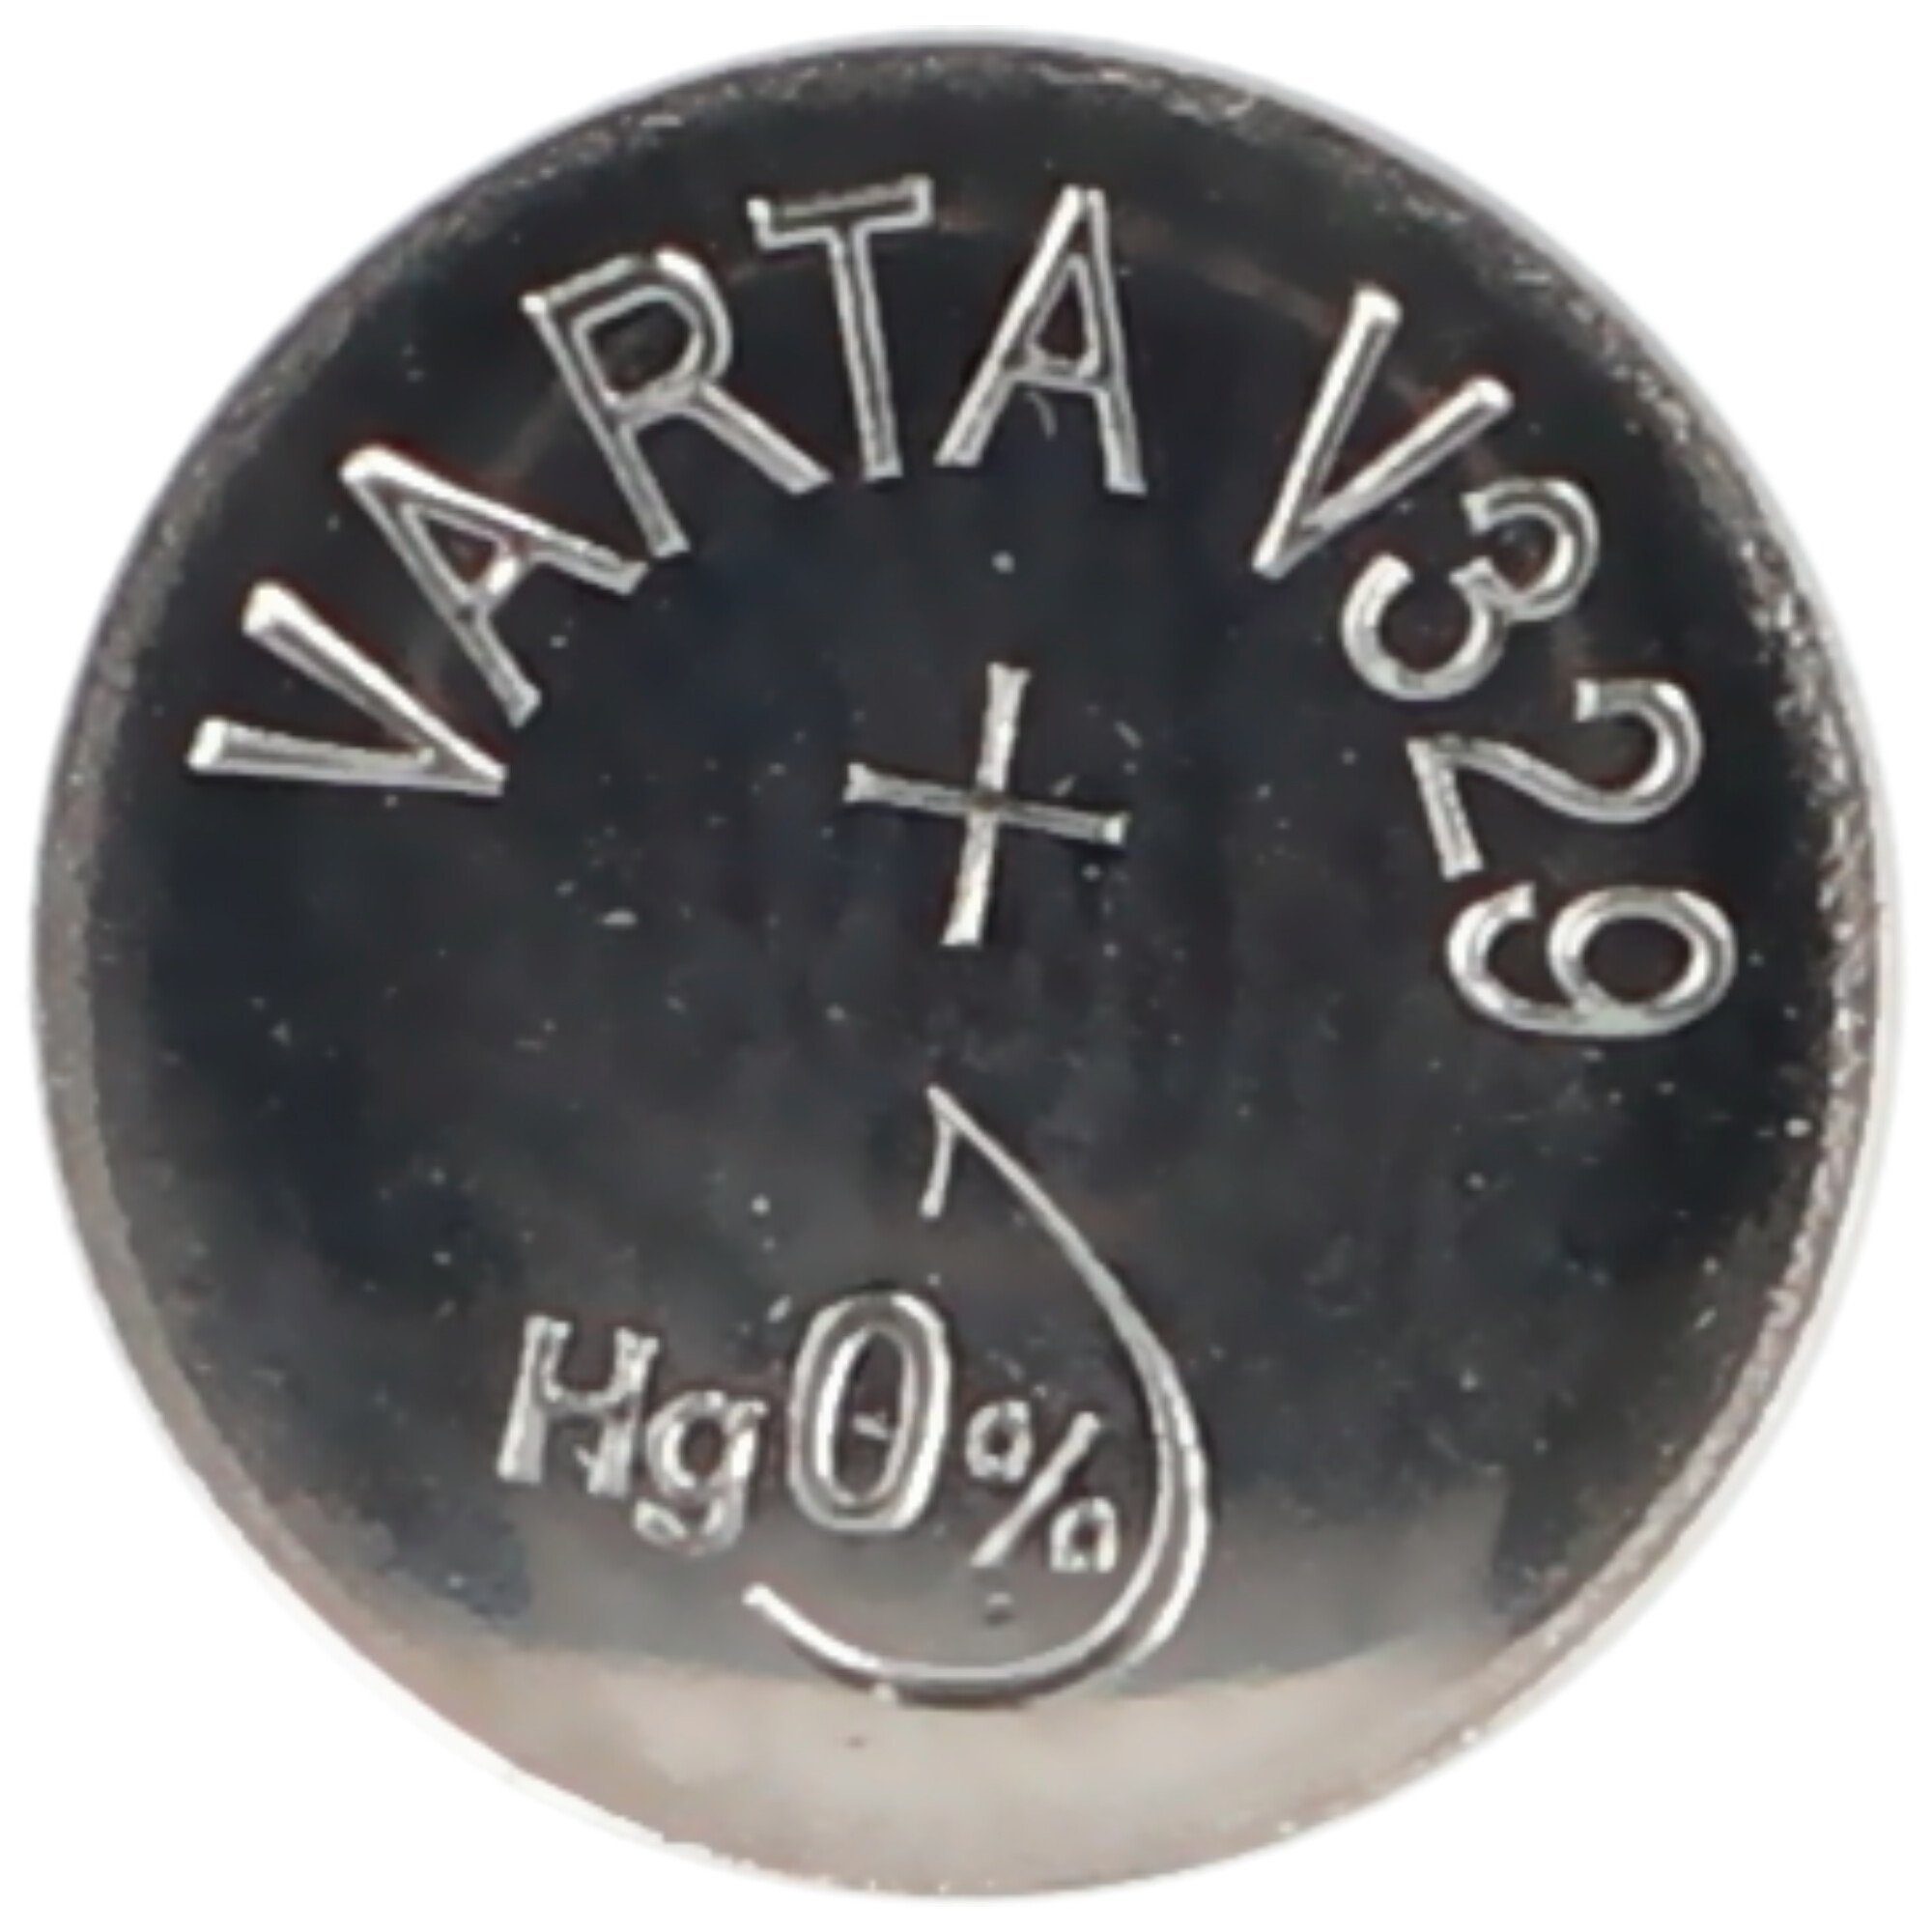 VARTA 329, Varta V329, SR731SW Knopfzelle für Uhren etc. Knopfzelle, (1,6 V)